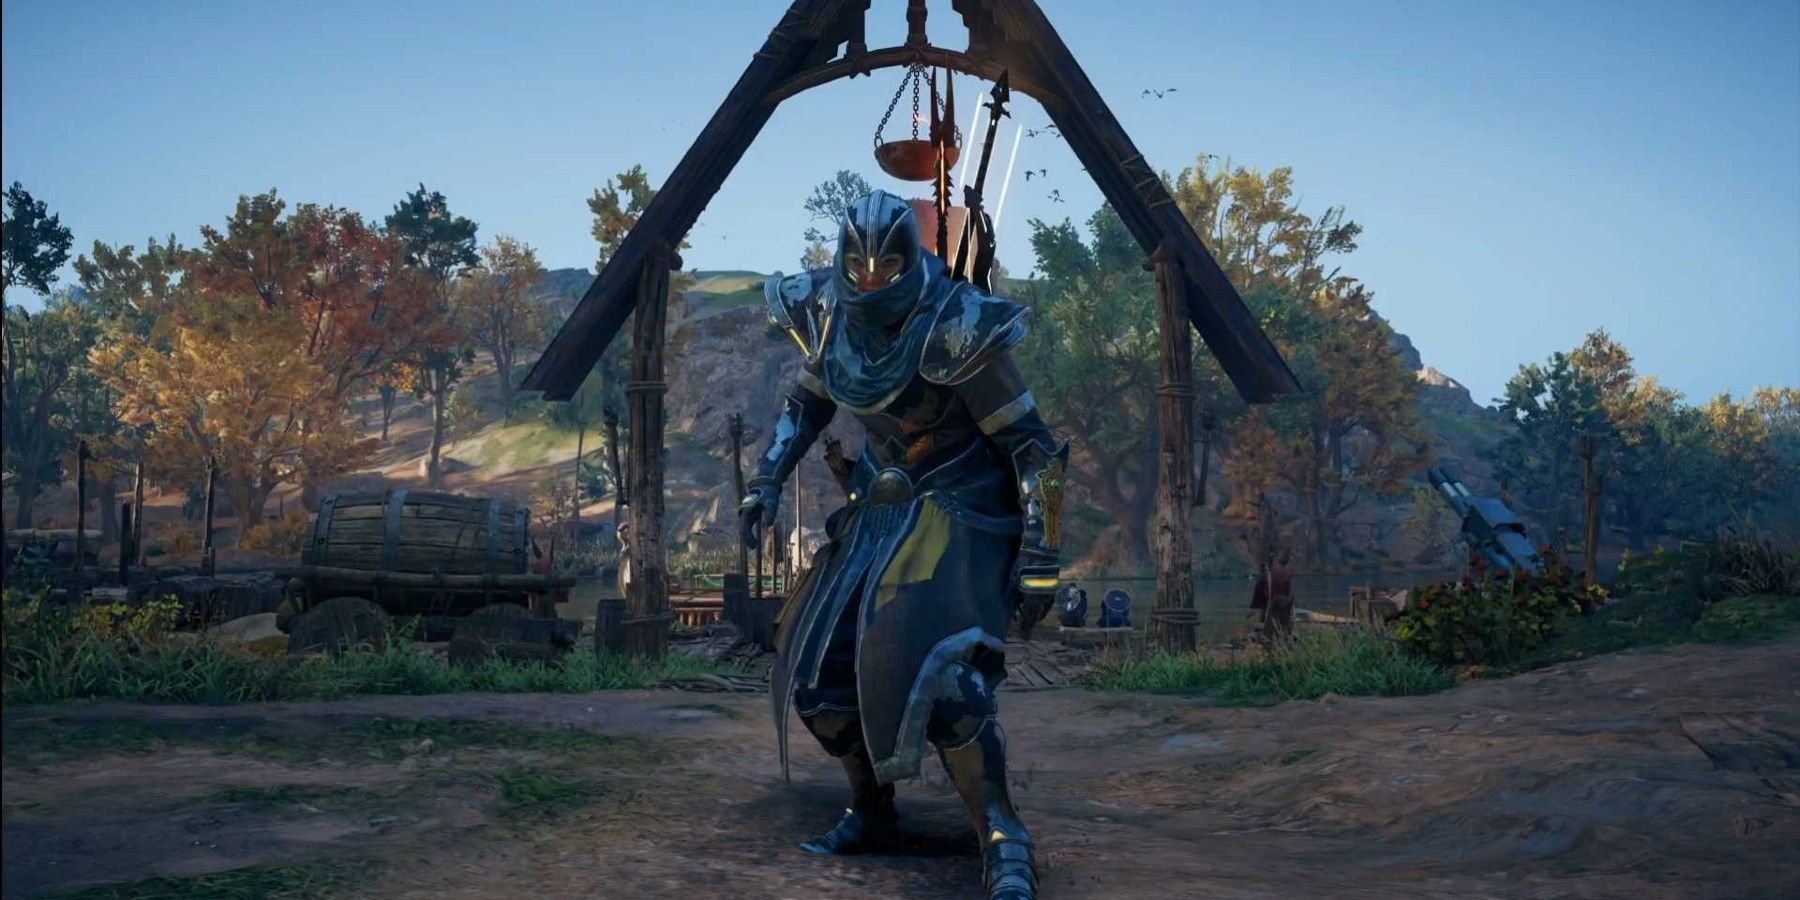 Assasisn's Creed Valhalla Fallen Heores armor set standing in field